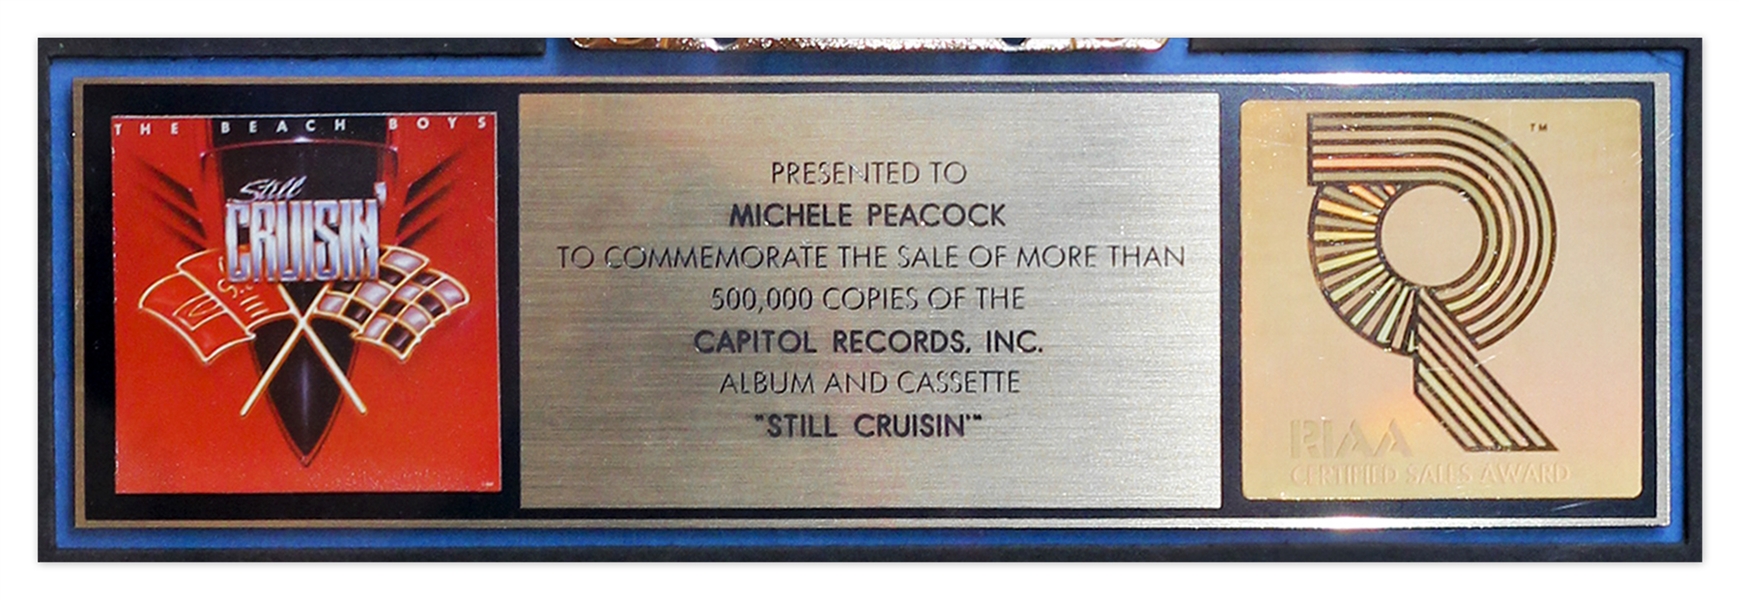 The Beach Boys RIAA Gold Record Award for ''Still Cruisin'''